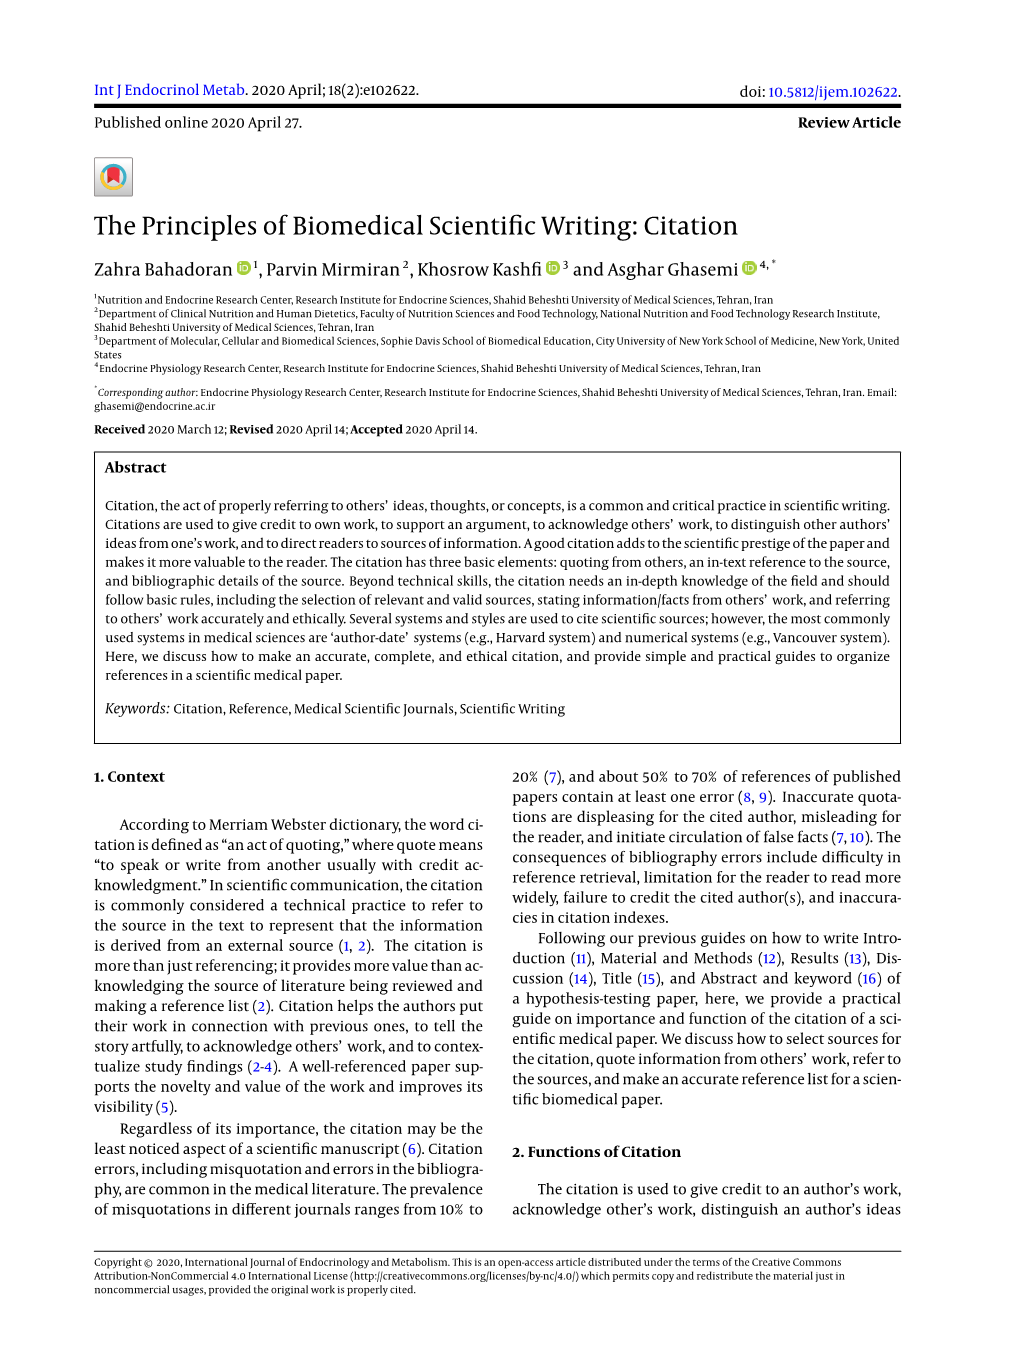 The Principles of Biomedical Scientific Writing: Citation